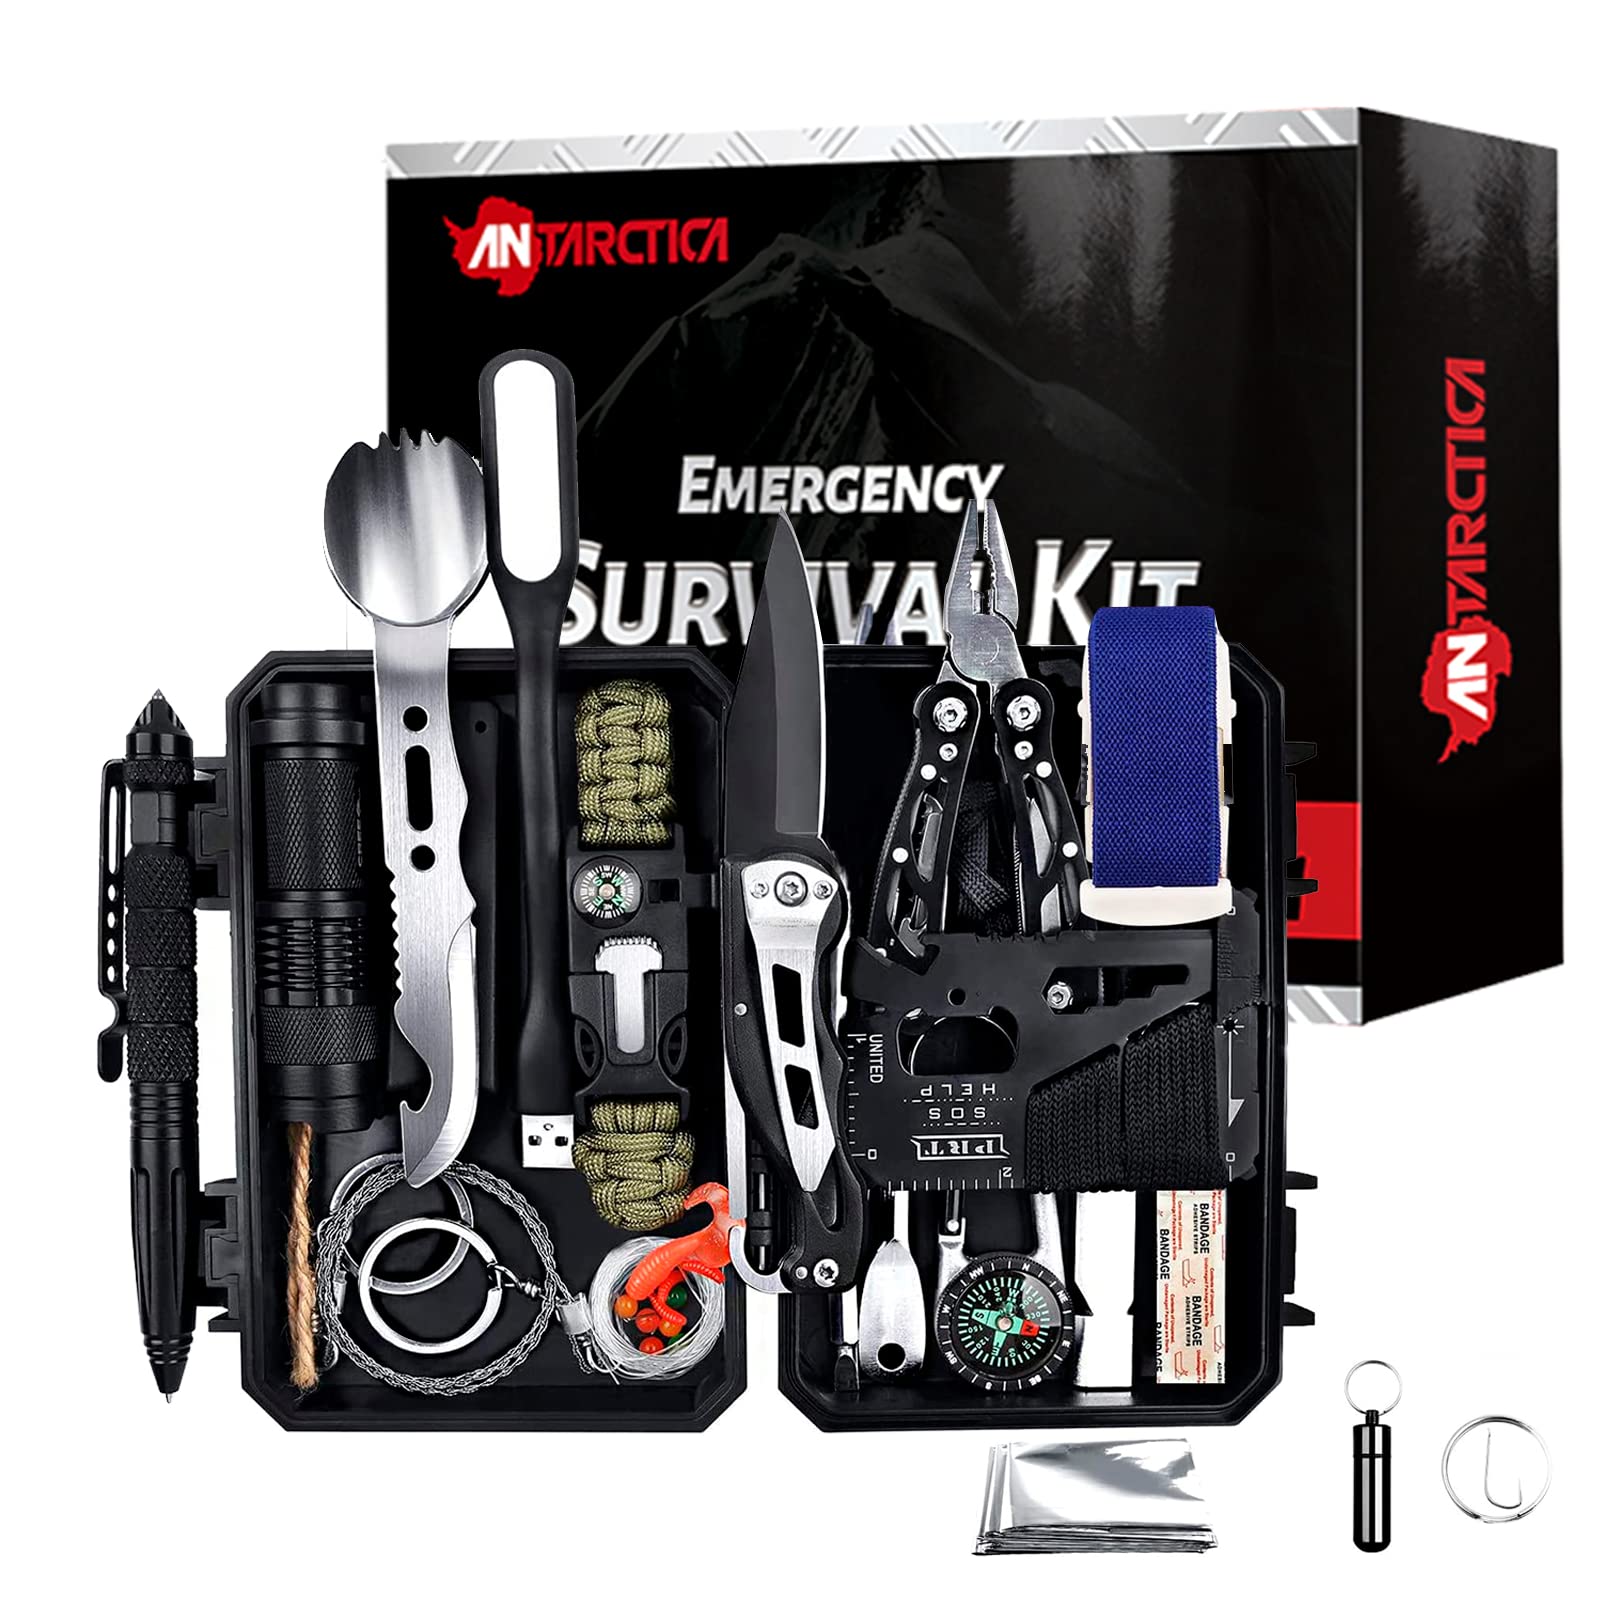 ANTARCTICA Gift for Men EDC Gear, Emergency Survival Gear Kits 60 in 1, Outdoor  Survival Tool